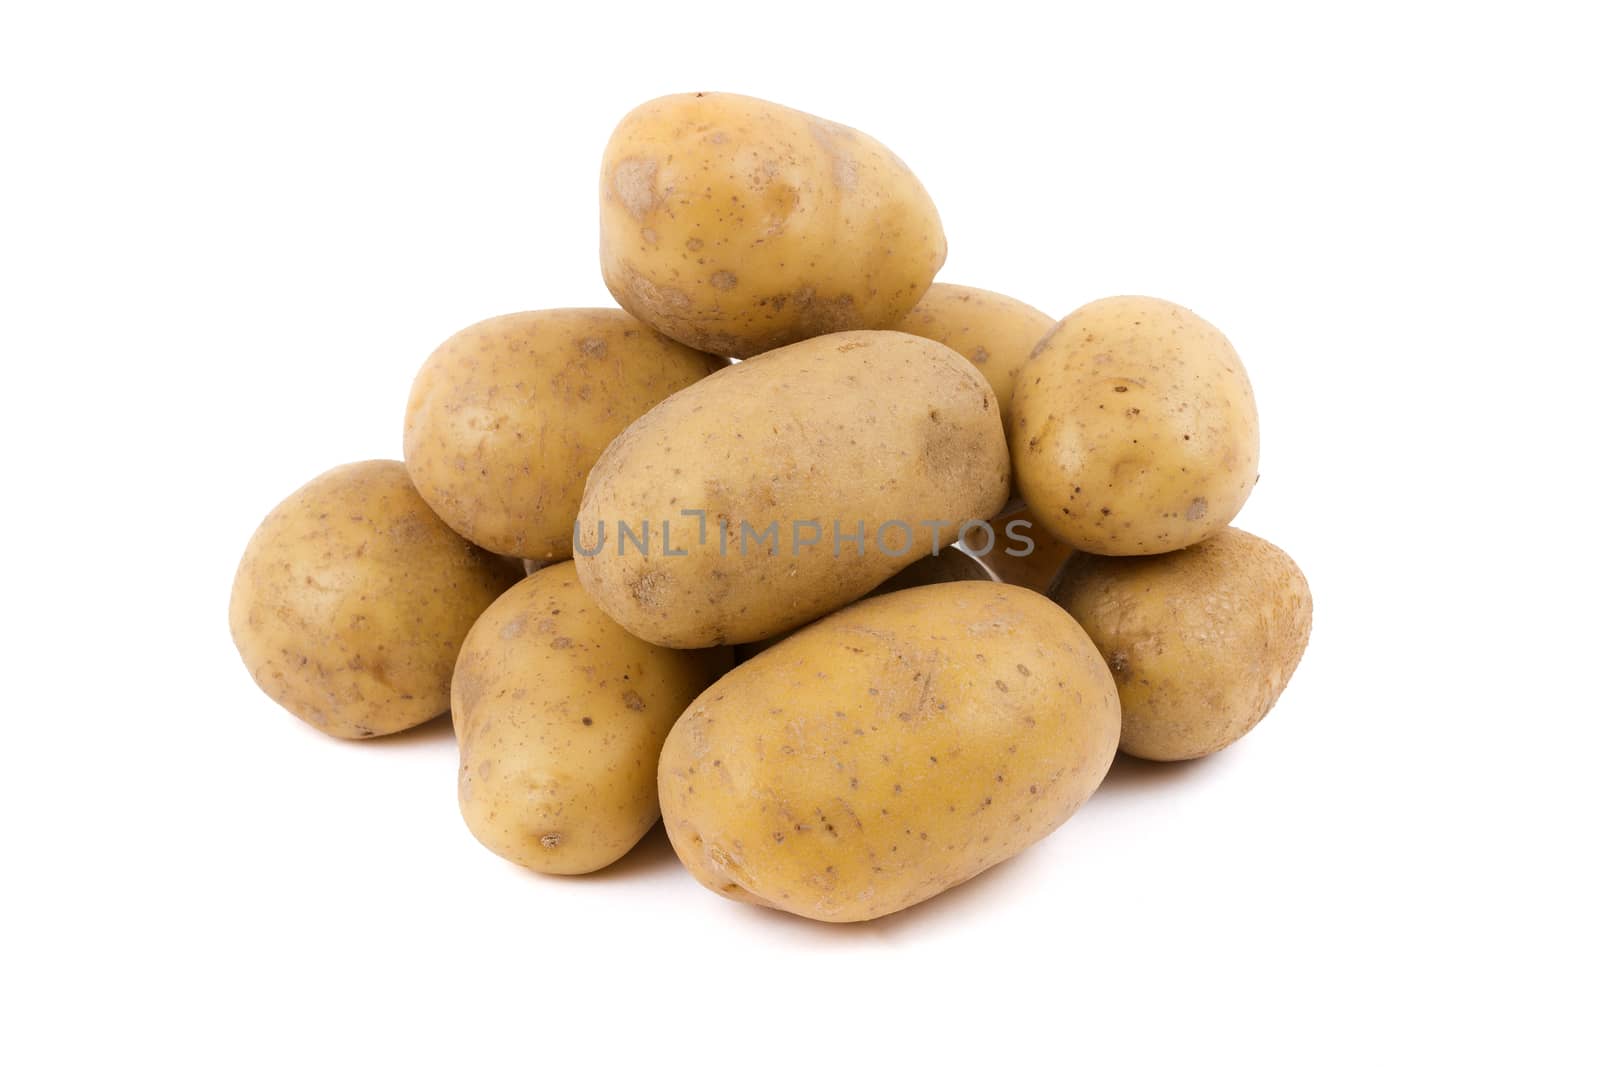 Fresh potatoes on a white background